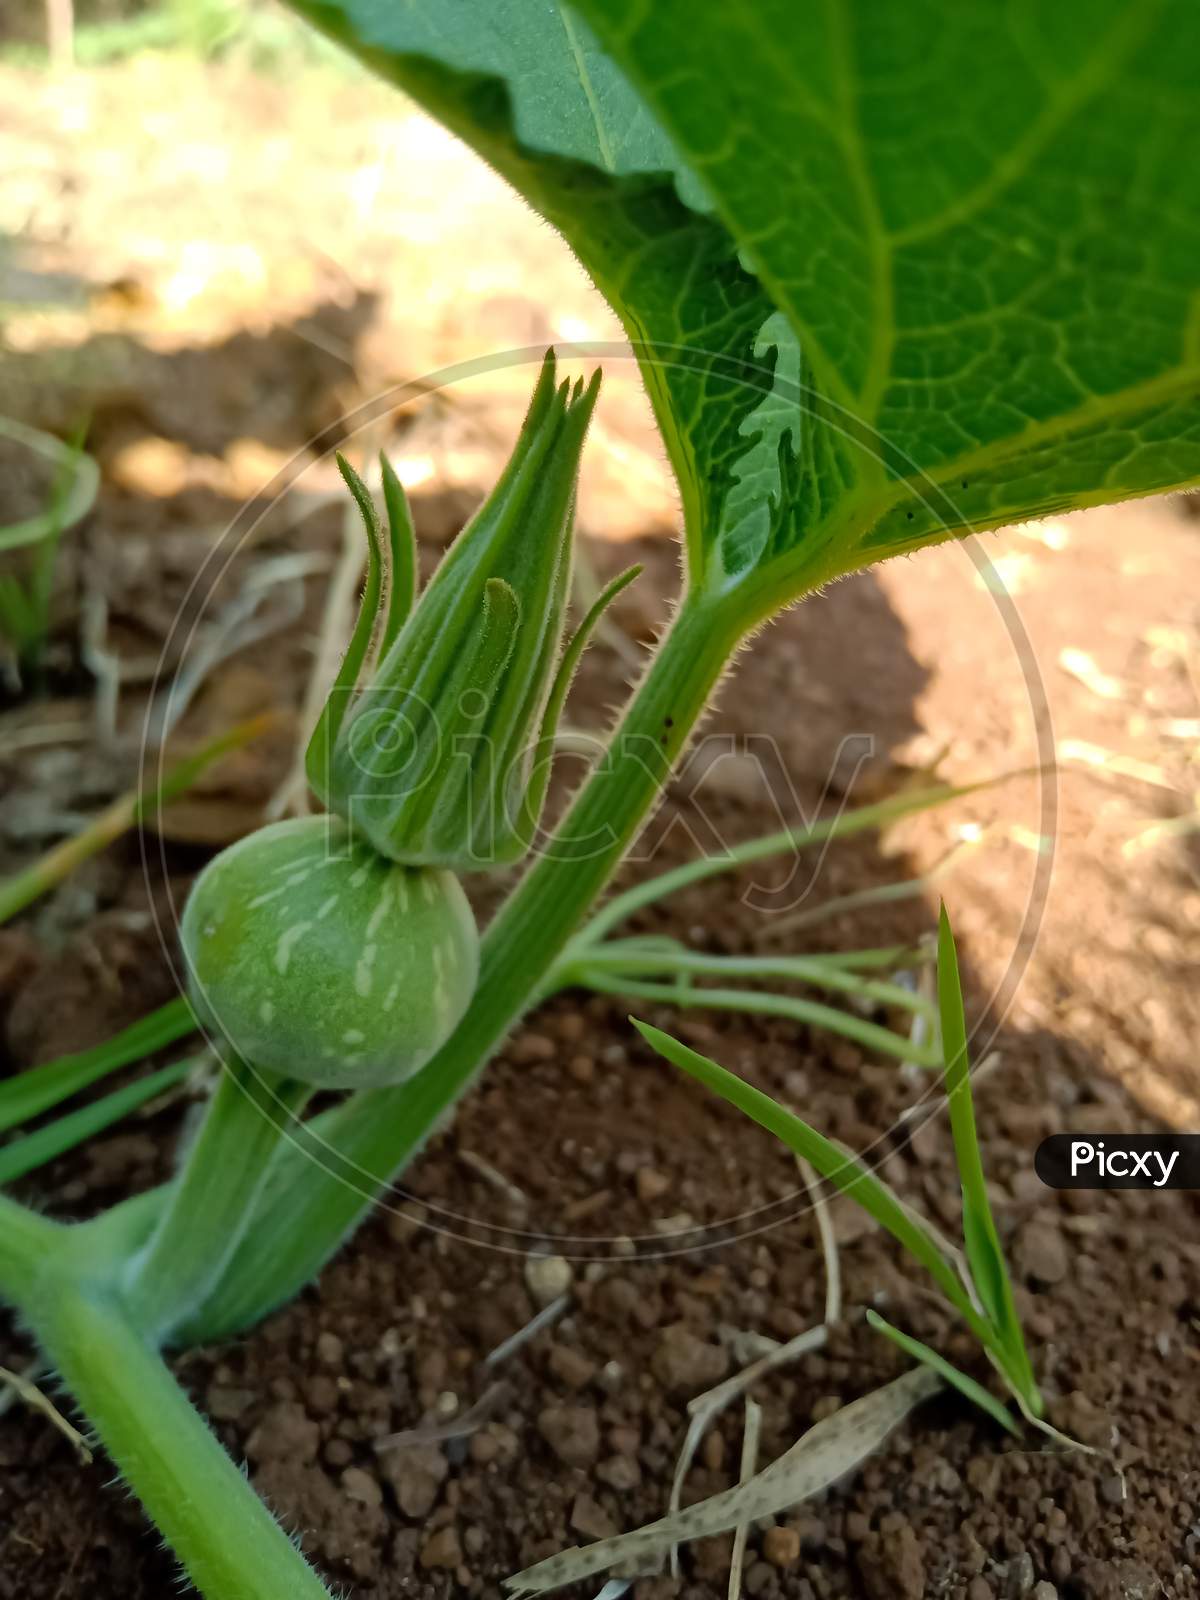 beby pumpkin growing on the vine in India